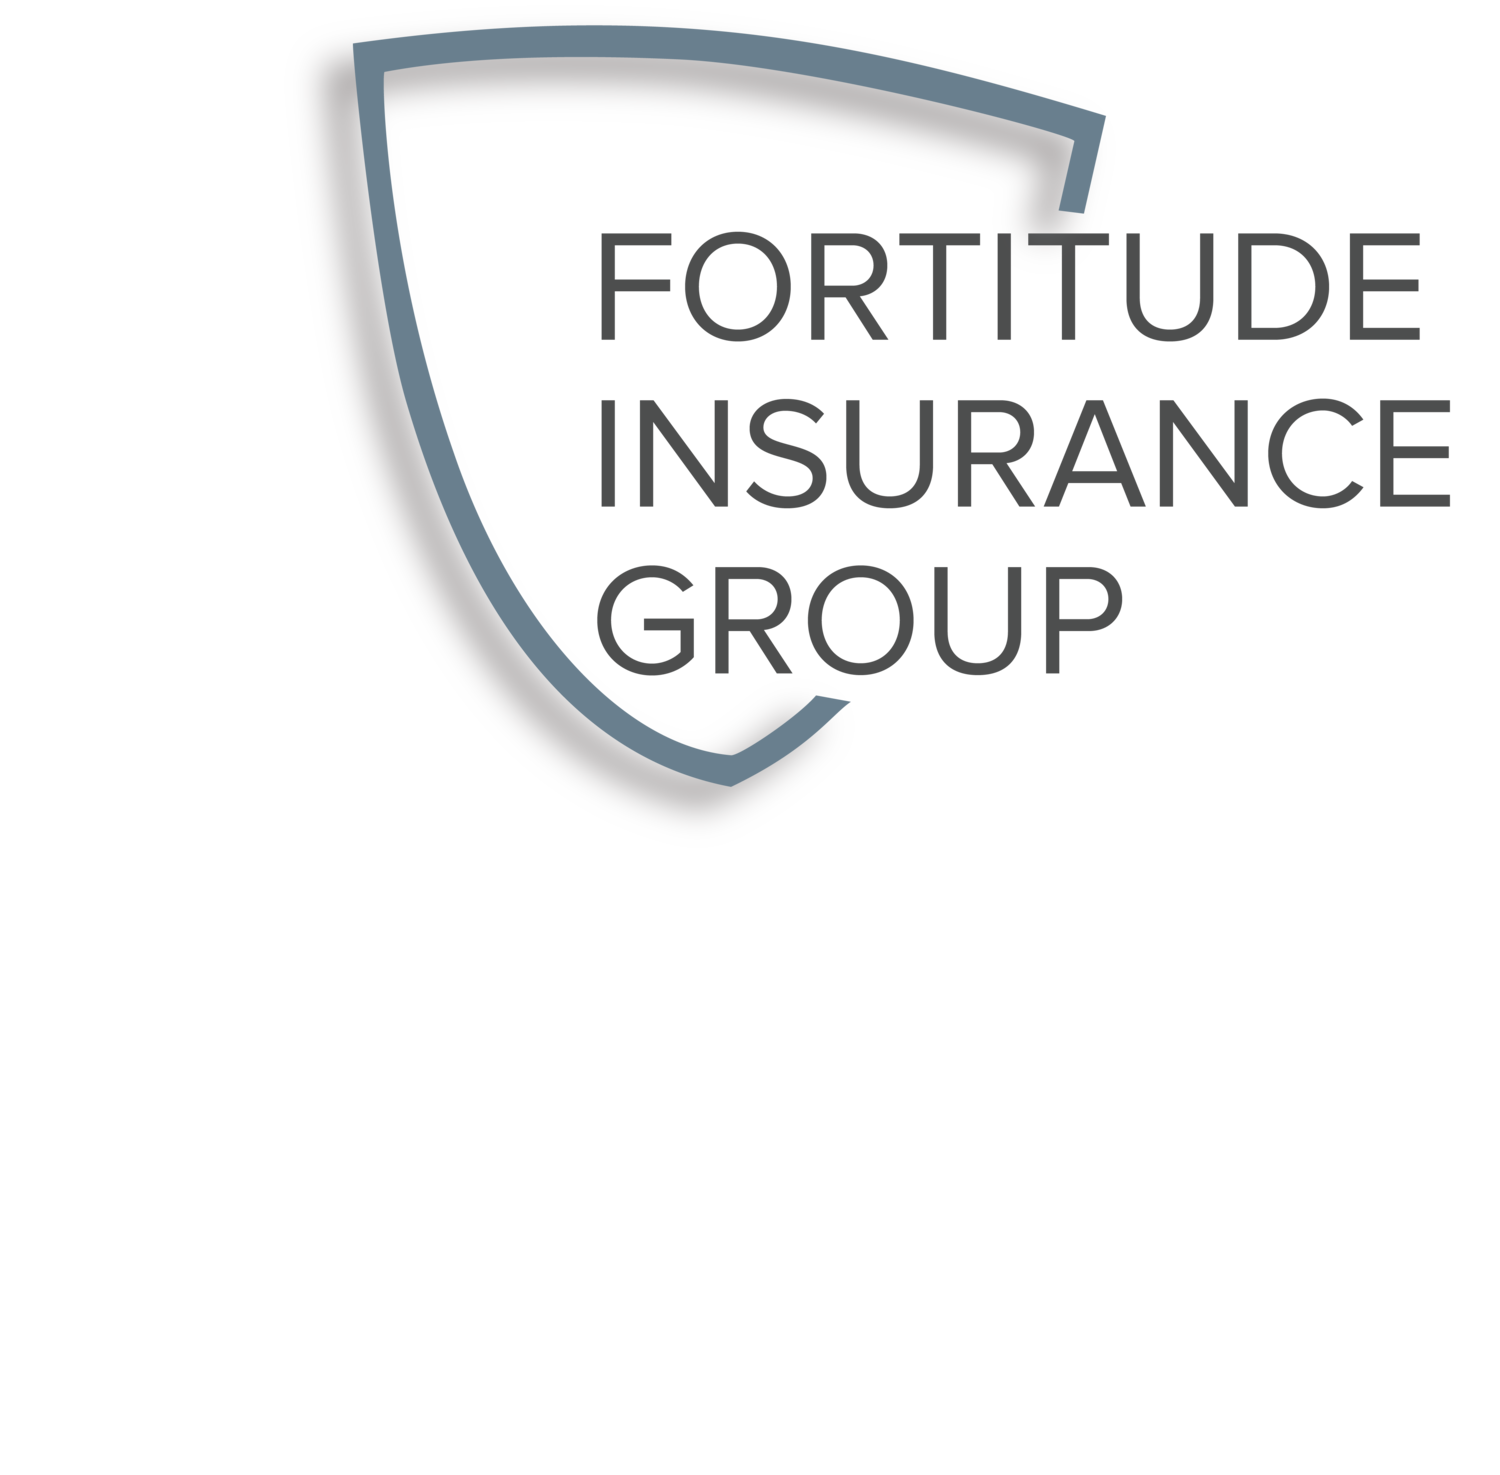 Fortitude Insurance